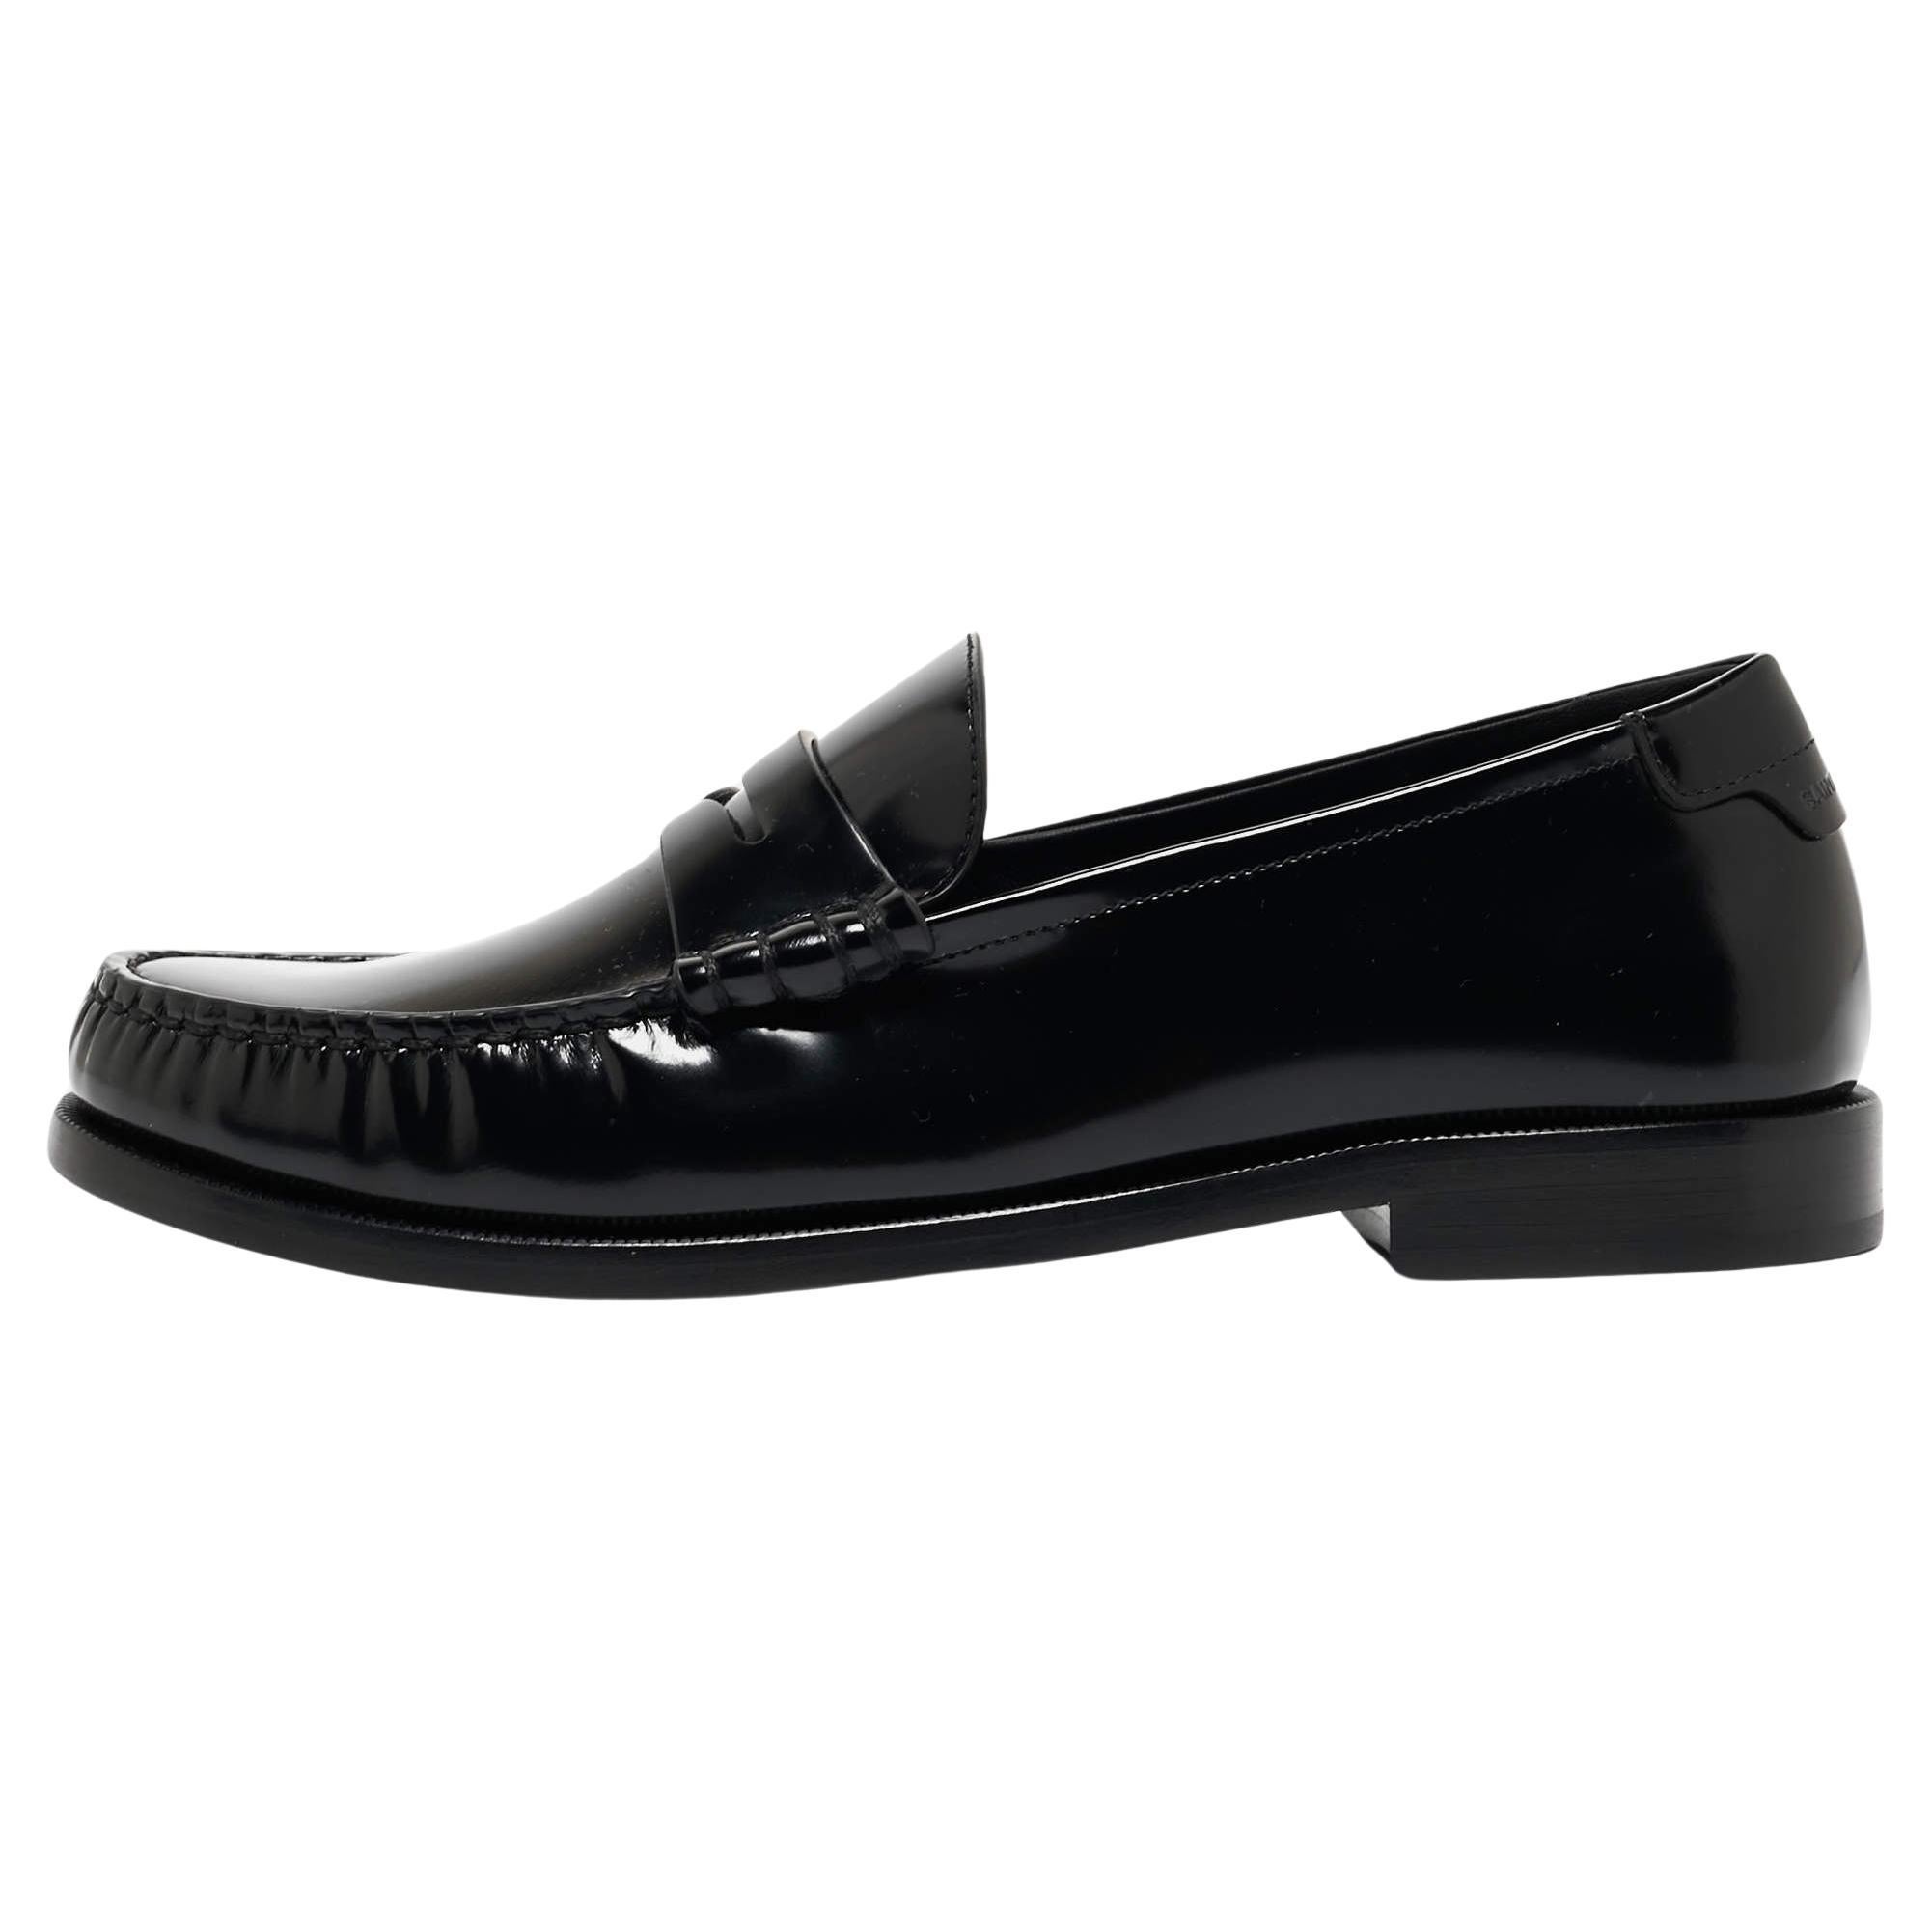 Saint Laurent Black Leather Penny Slip On Loafers Size 38